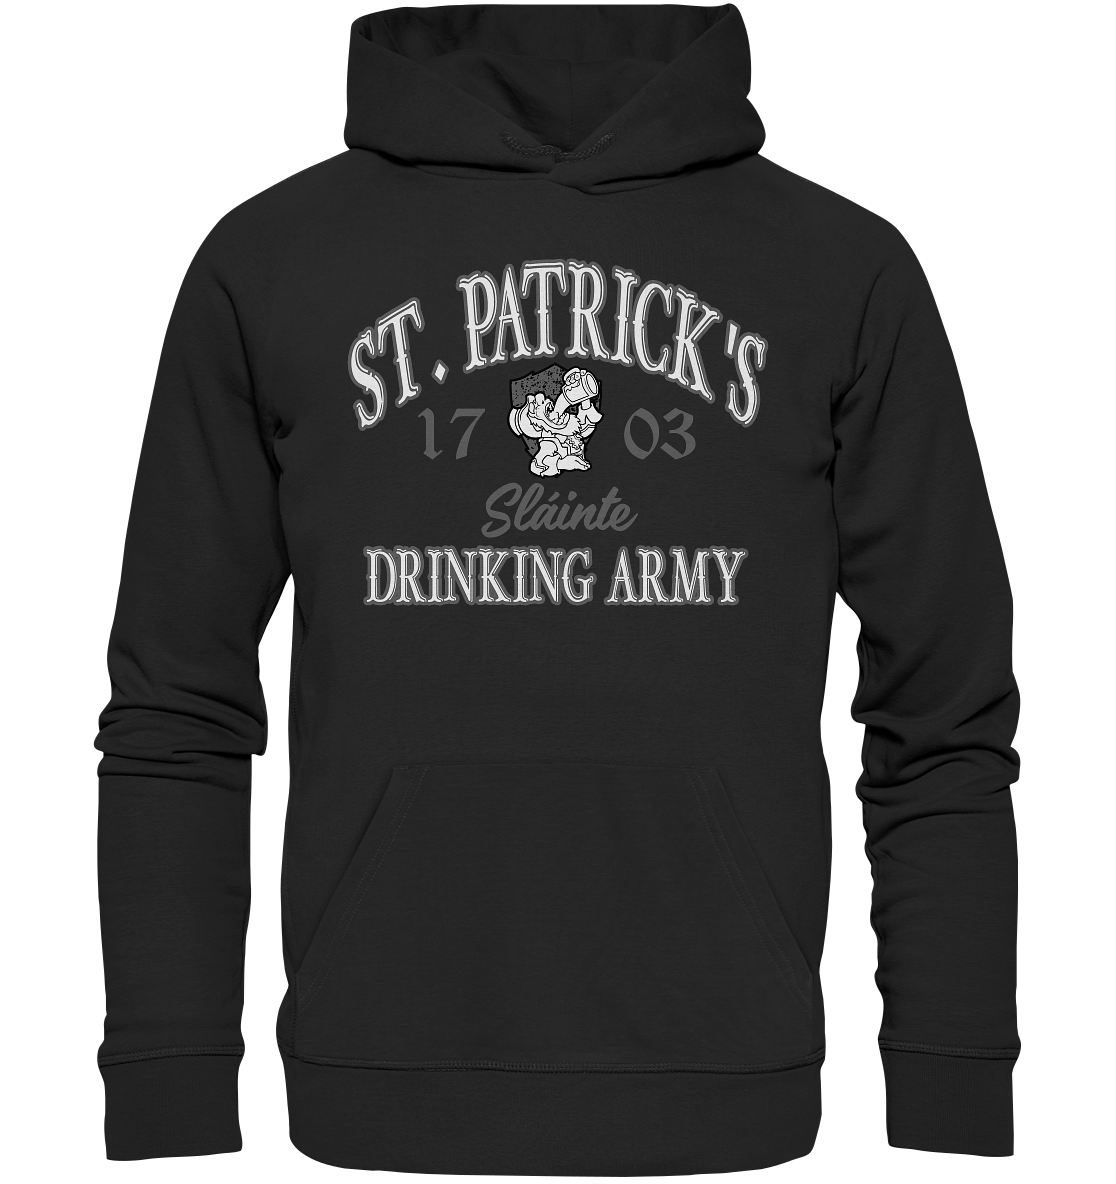 St. Patrick's Drinking Army "Sláinte" - Premium Unisex Hoodie